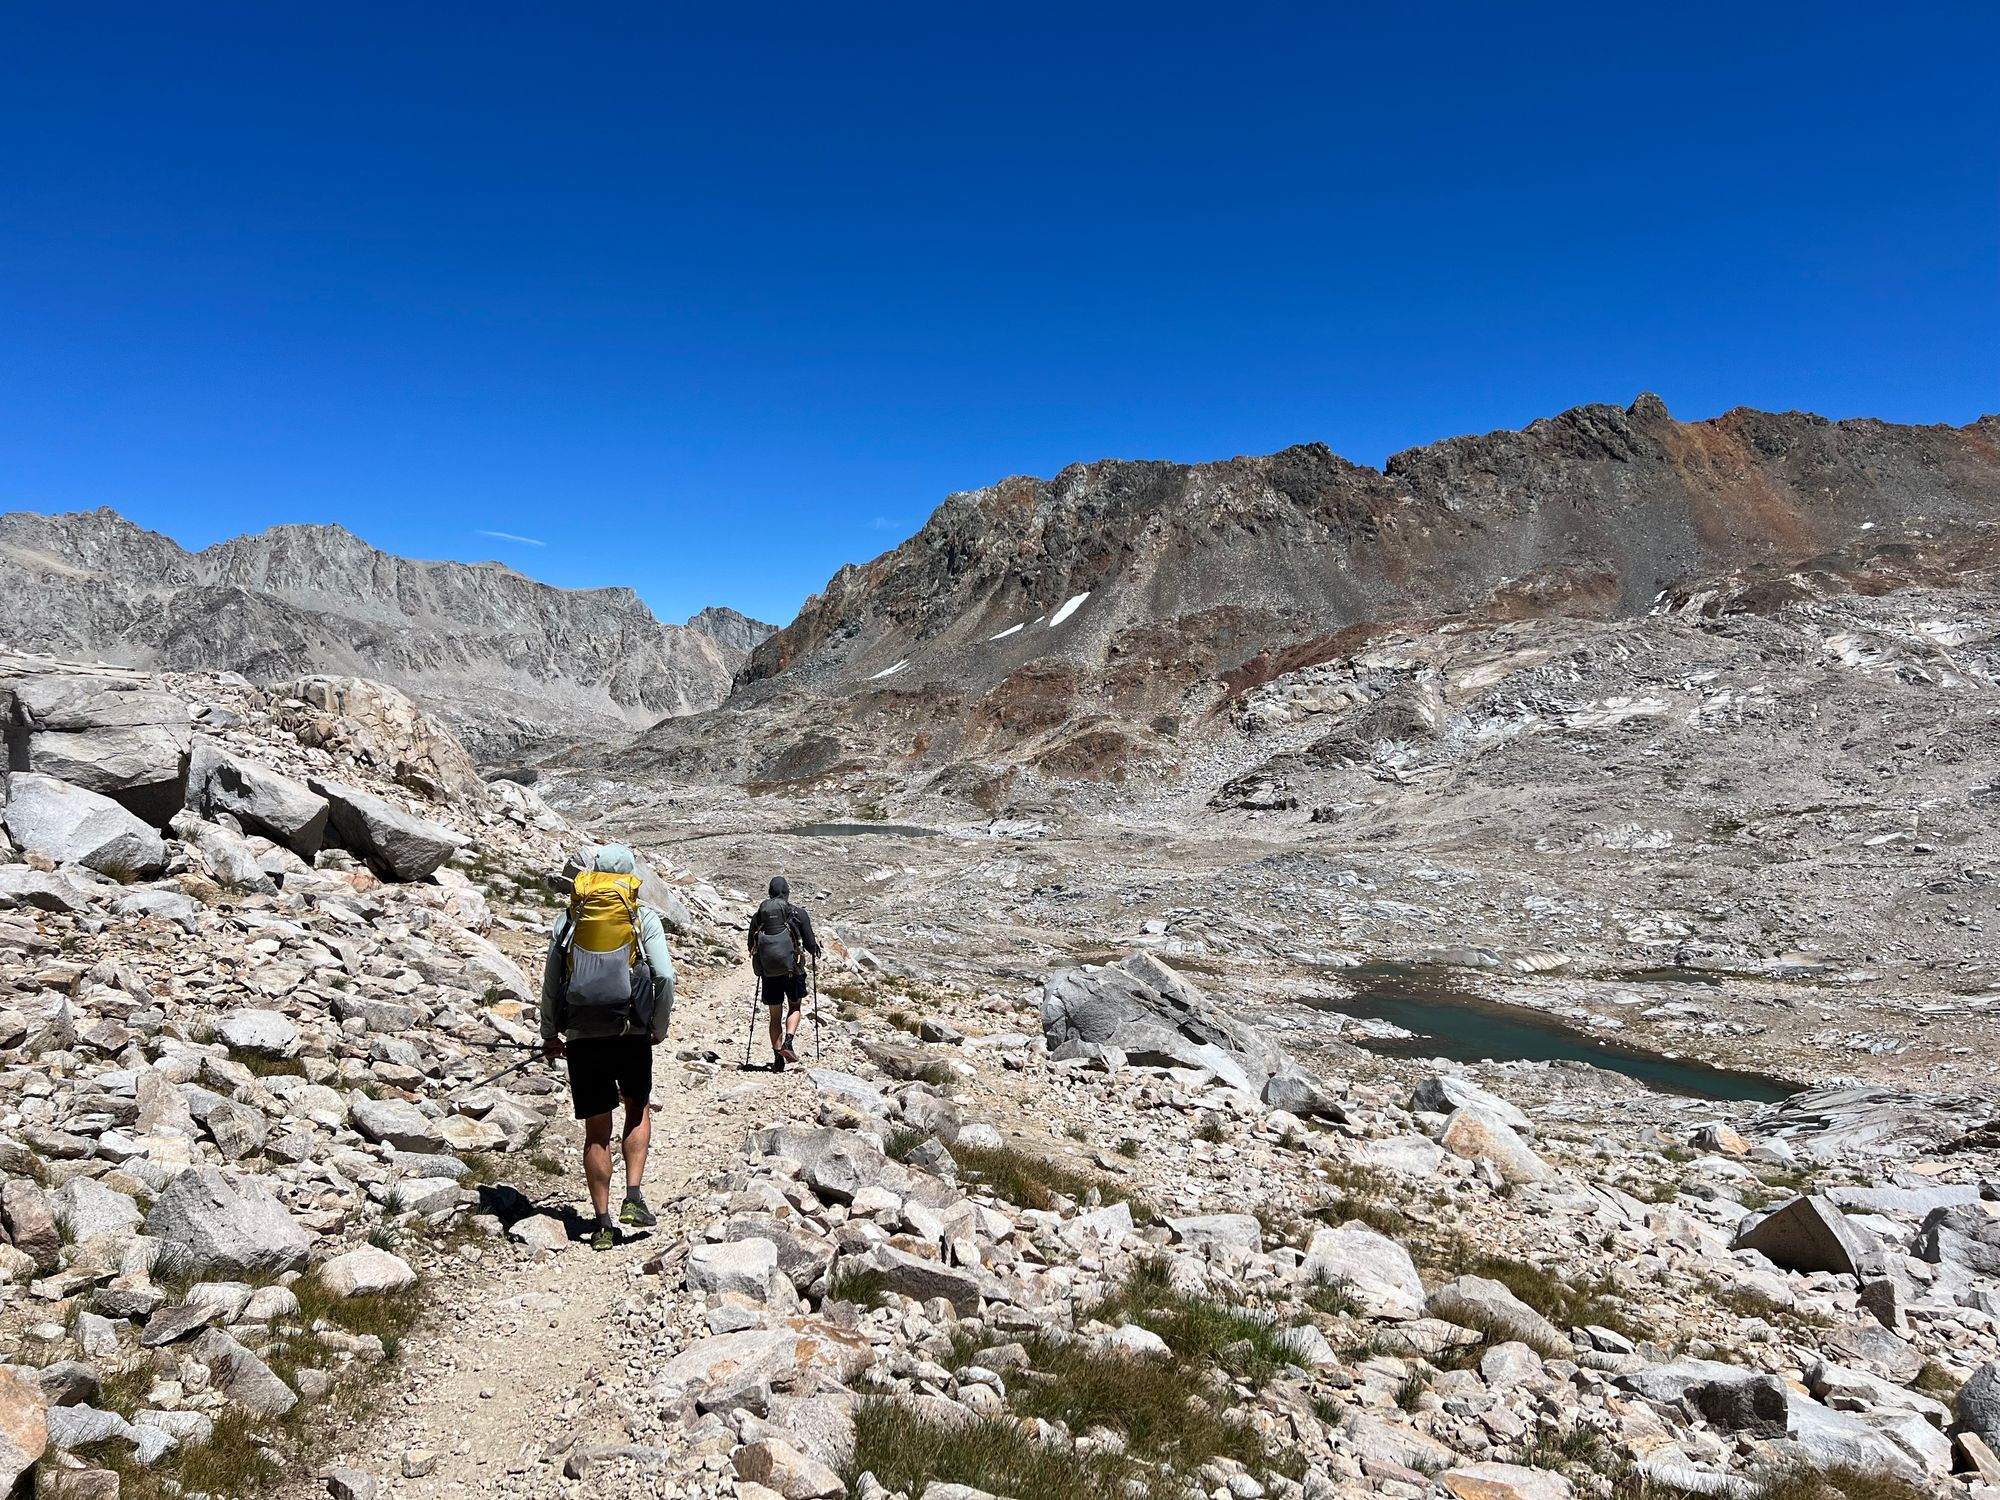 Two backpackers walking through rocky terrain.